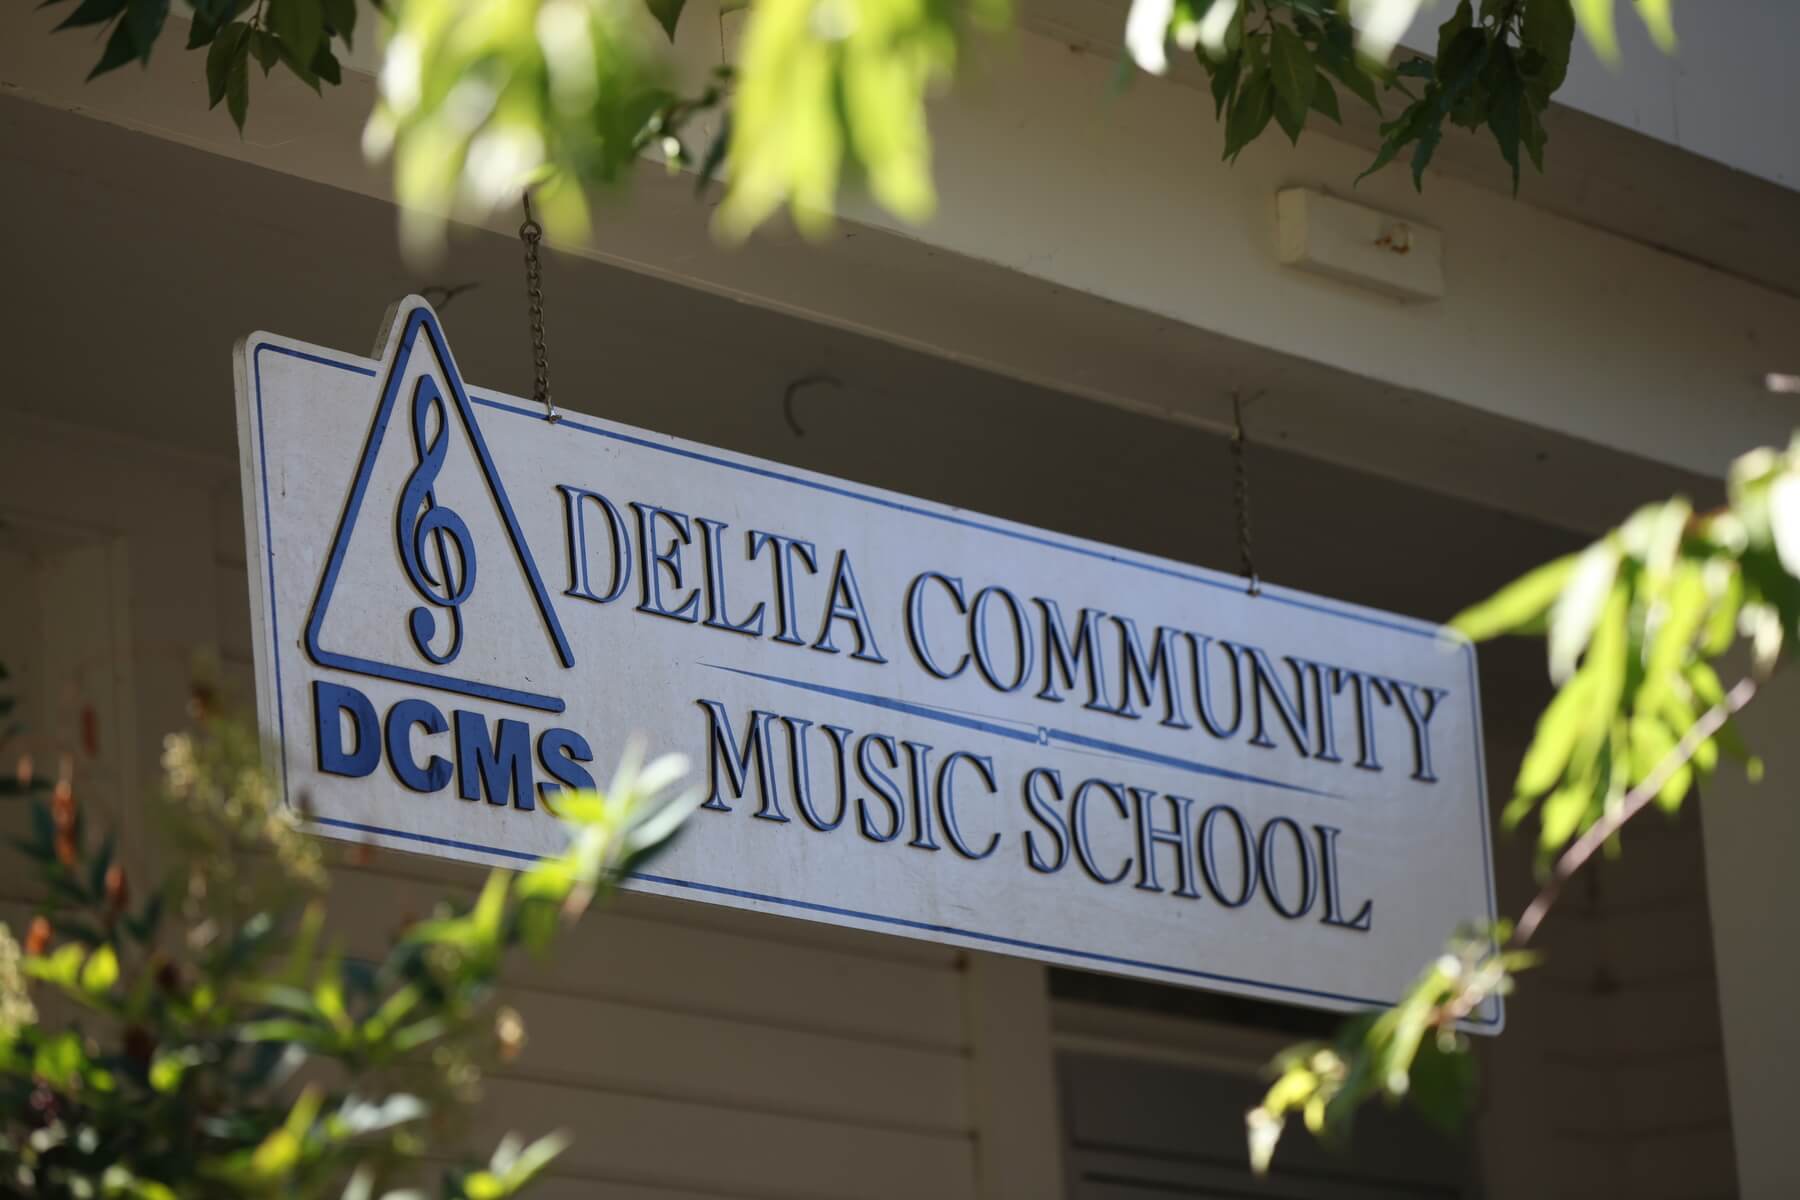 Delta Community Music School